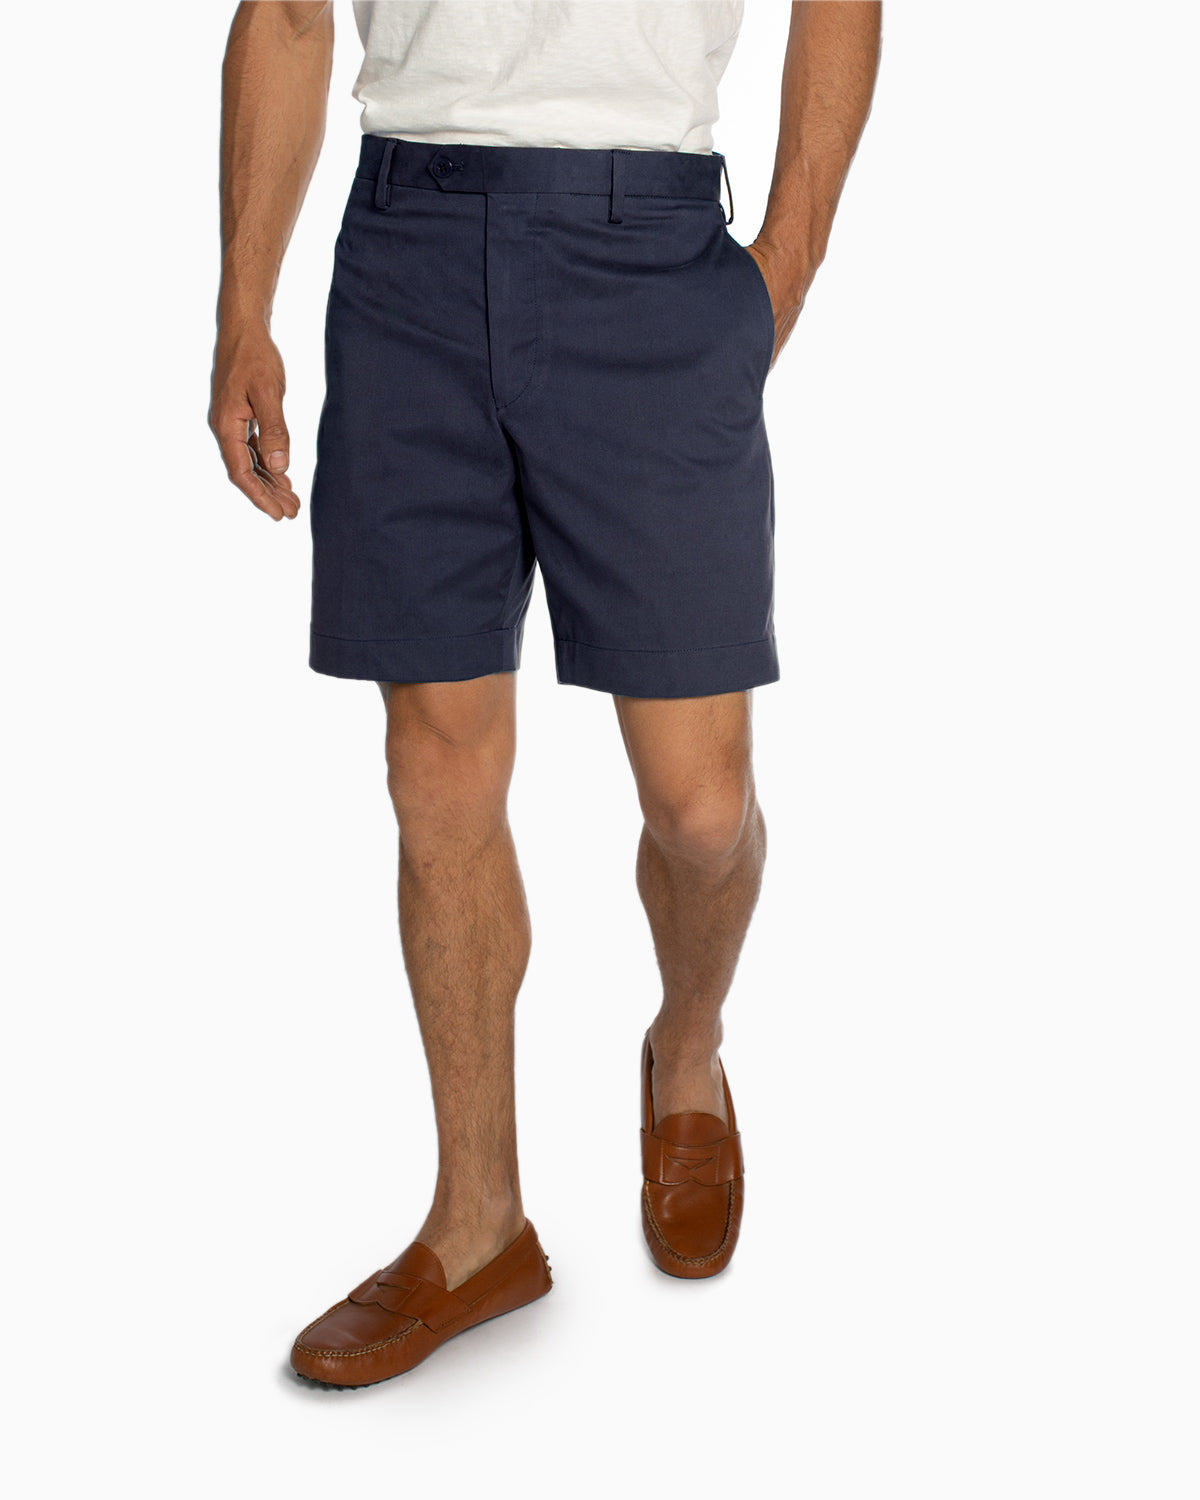 Cotton Stretch Shorts, Navy